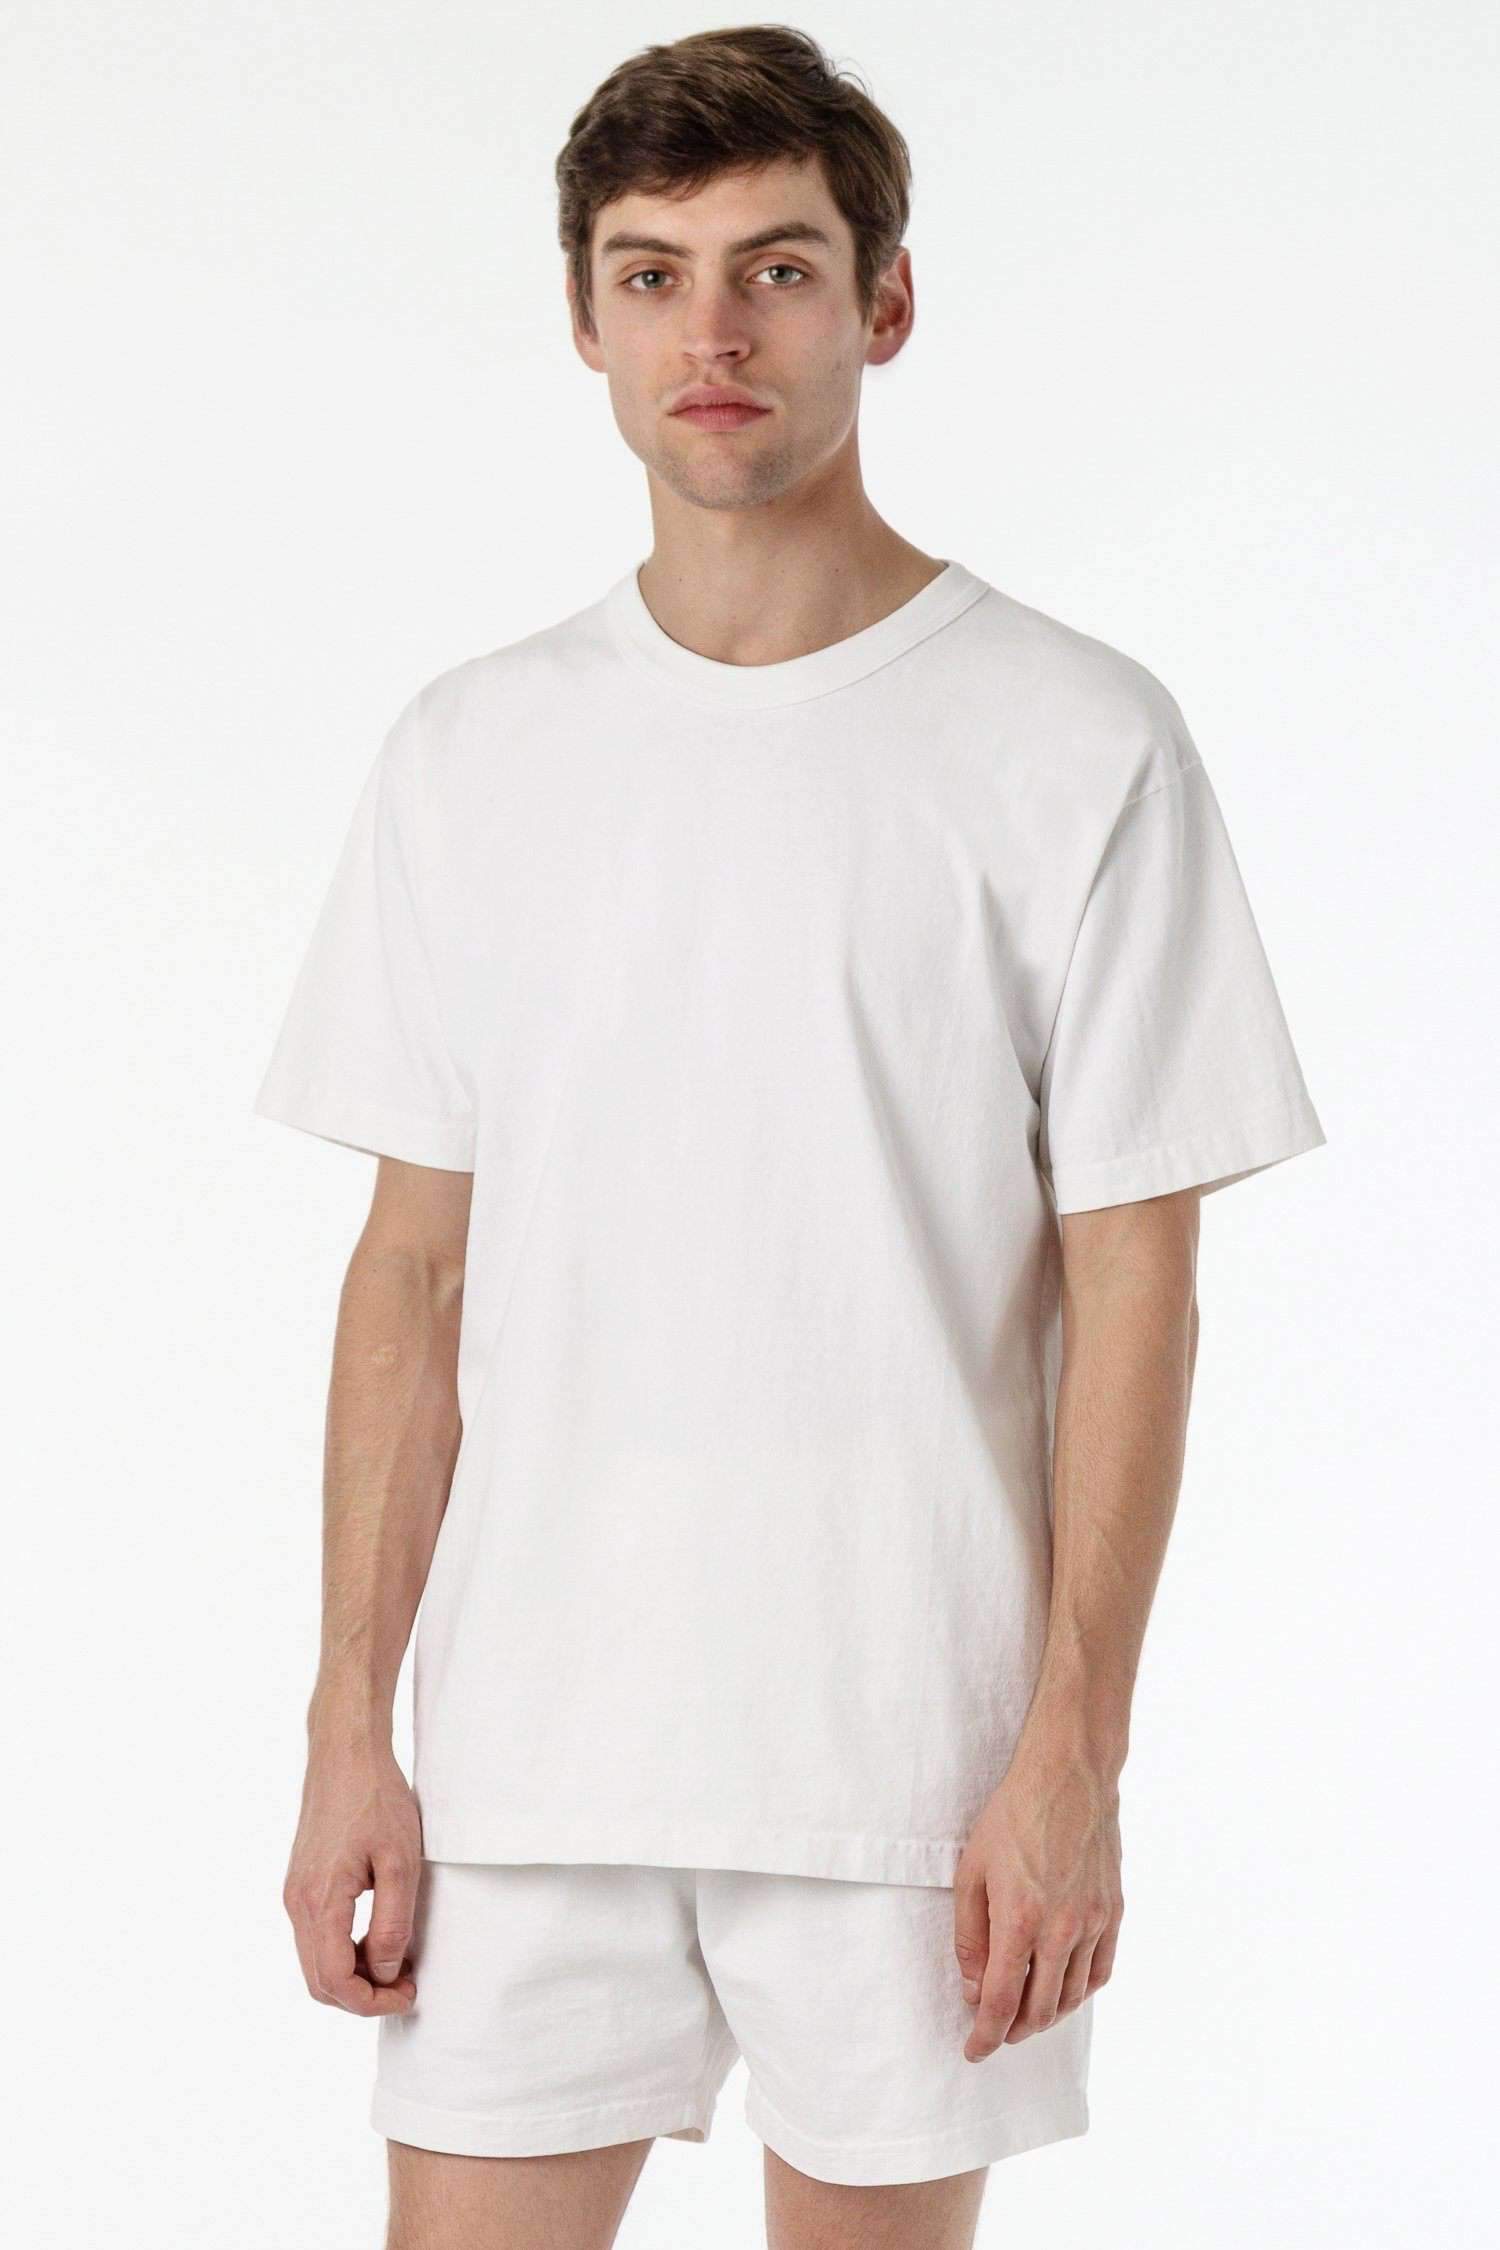 1203GD - Short Sleeve Binding Garment Dye T-Shirt T-Shirt Los Angeles Apparel Off-White XS 